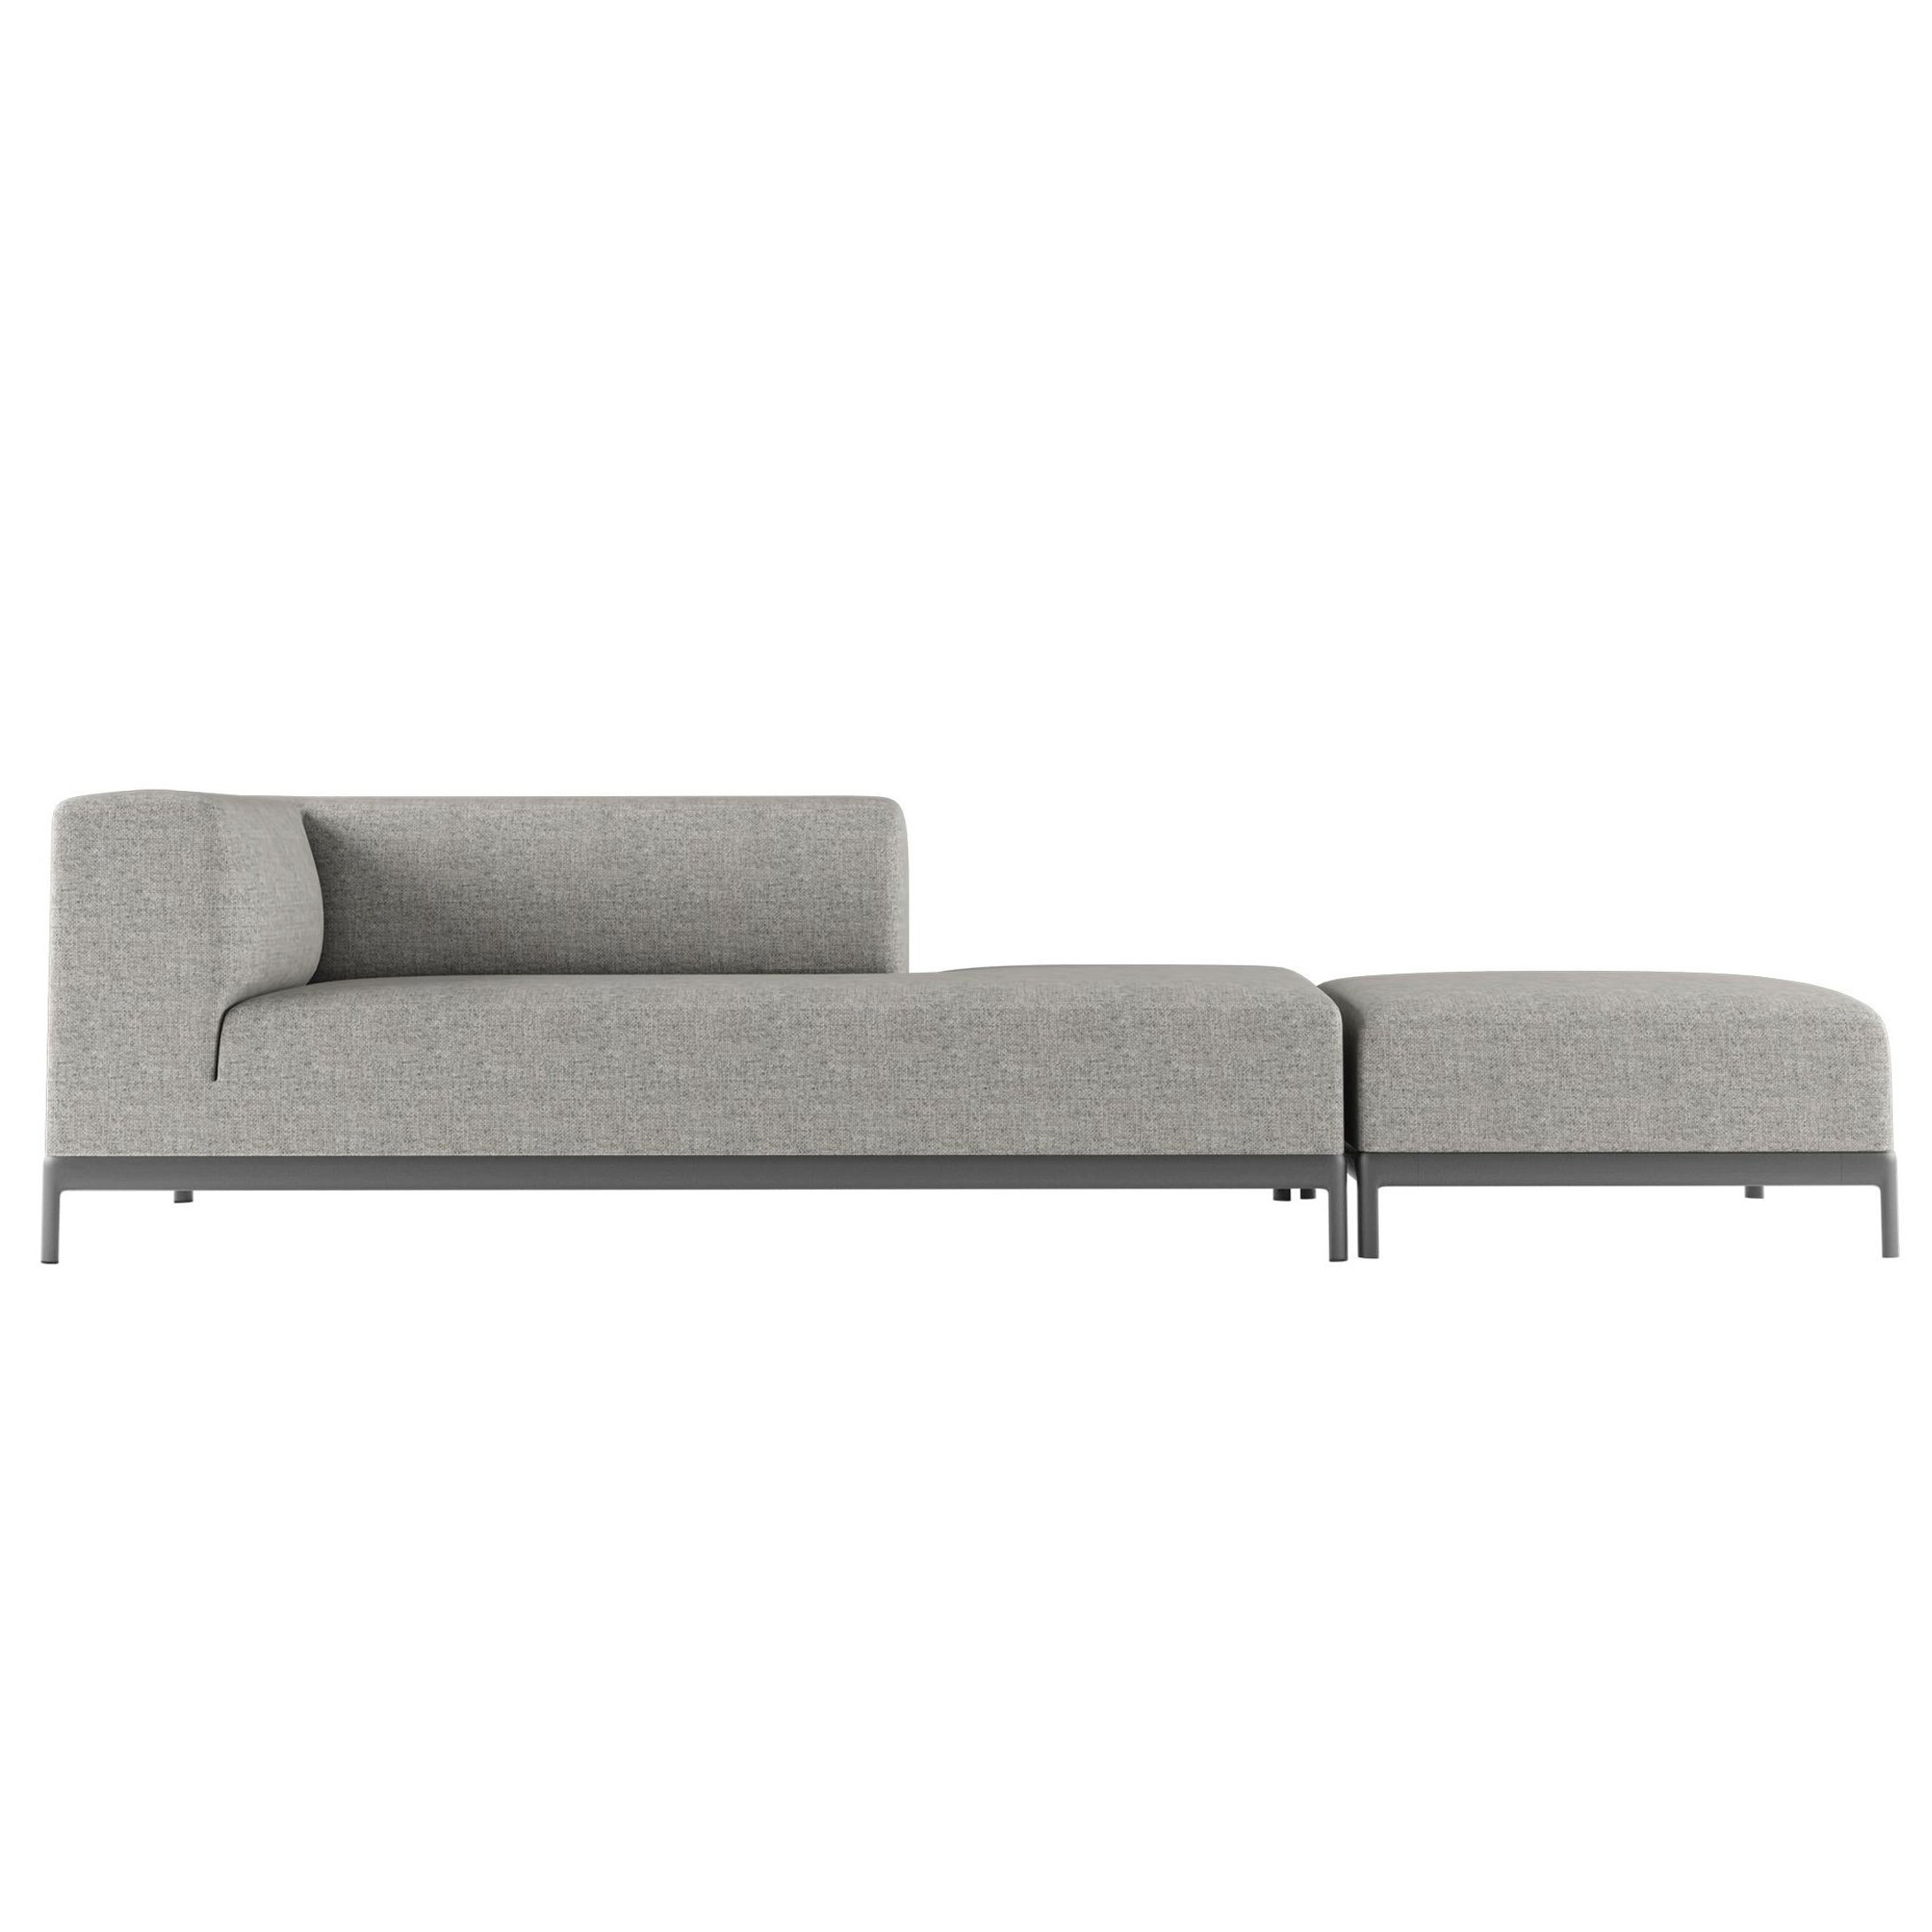 Alias P64+P70 AluZen Soft Sofa Set in Upholstery with Lacquered Aluminium Frame